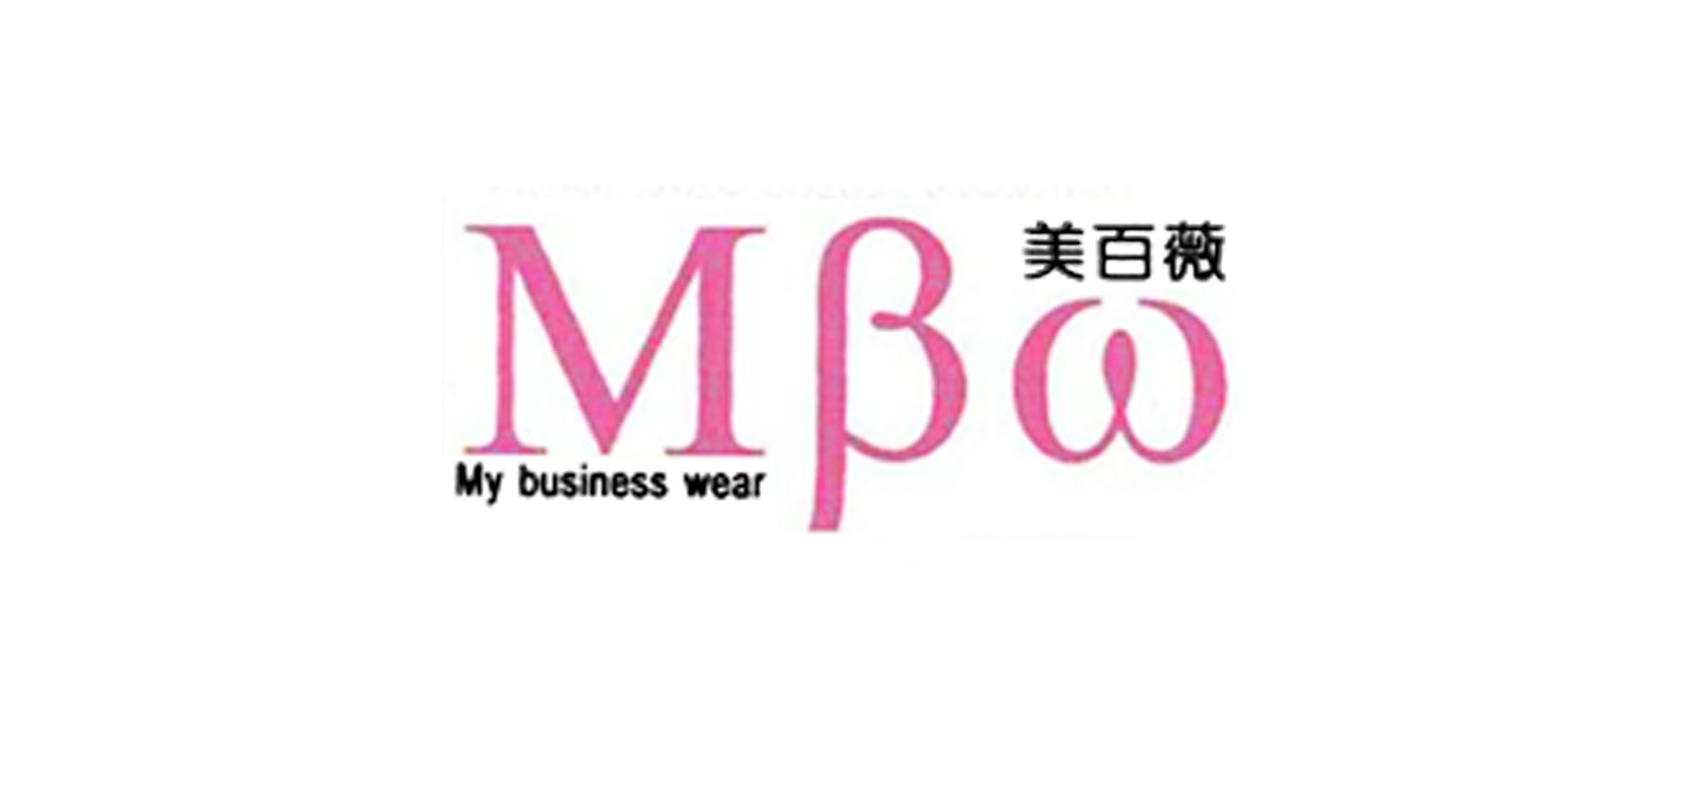 美百薇/MY BUSINESS WEAR MPW